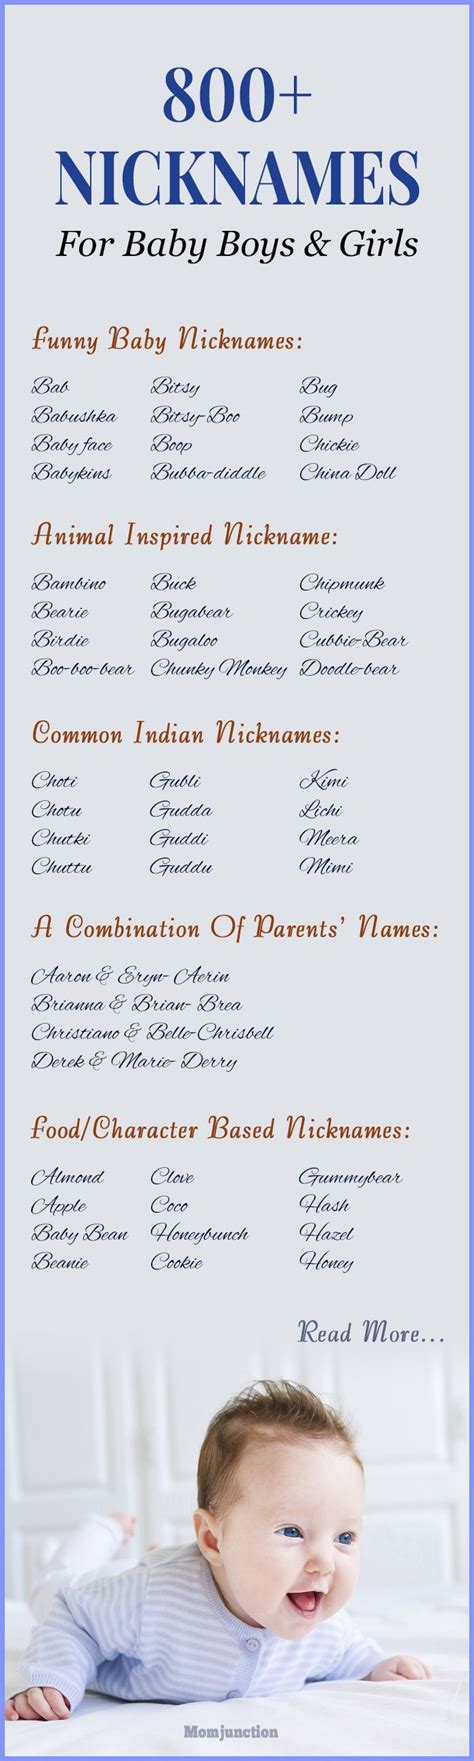 top 10 nicknames for baby girl